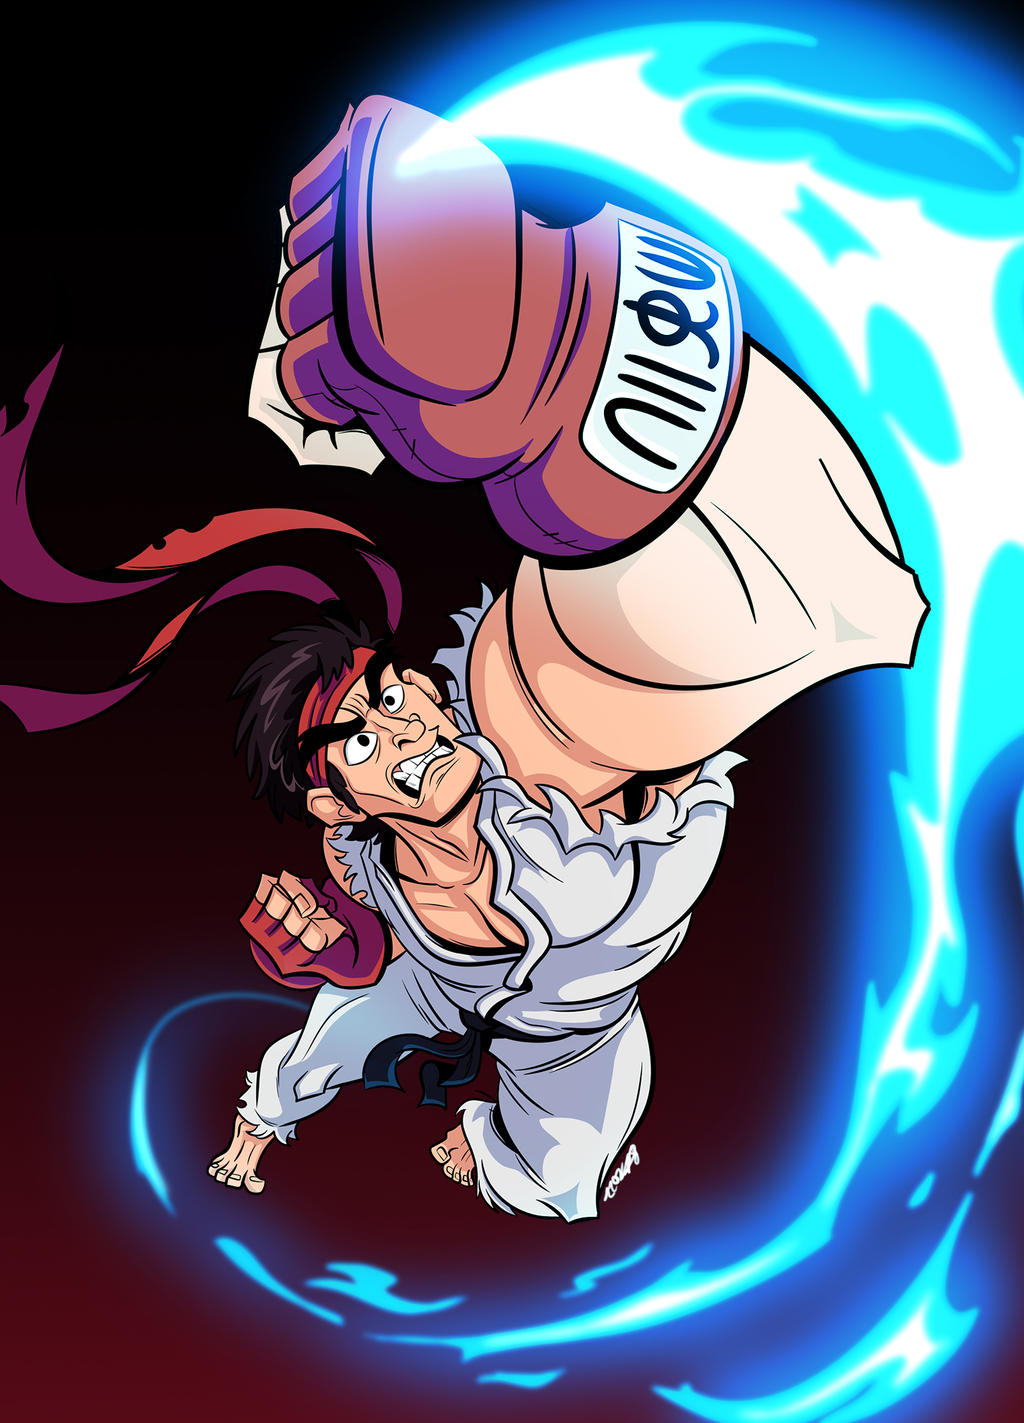 Street Fighter - Ryu by HipsterSakazaki on DeviantArt